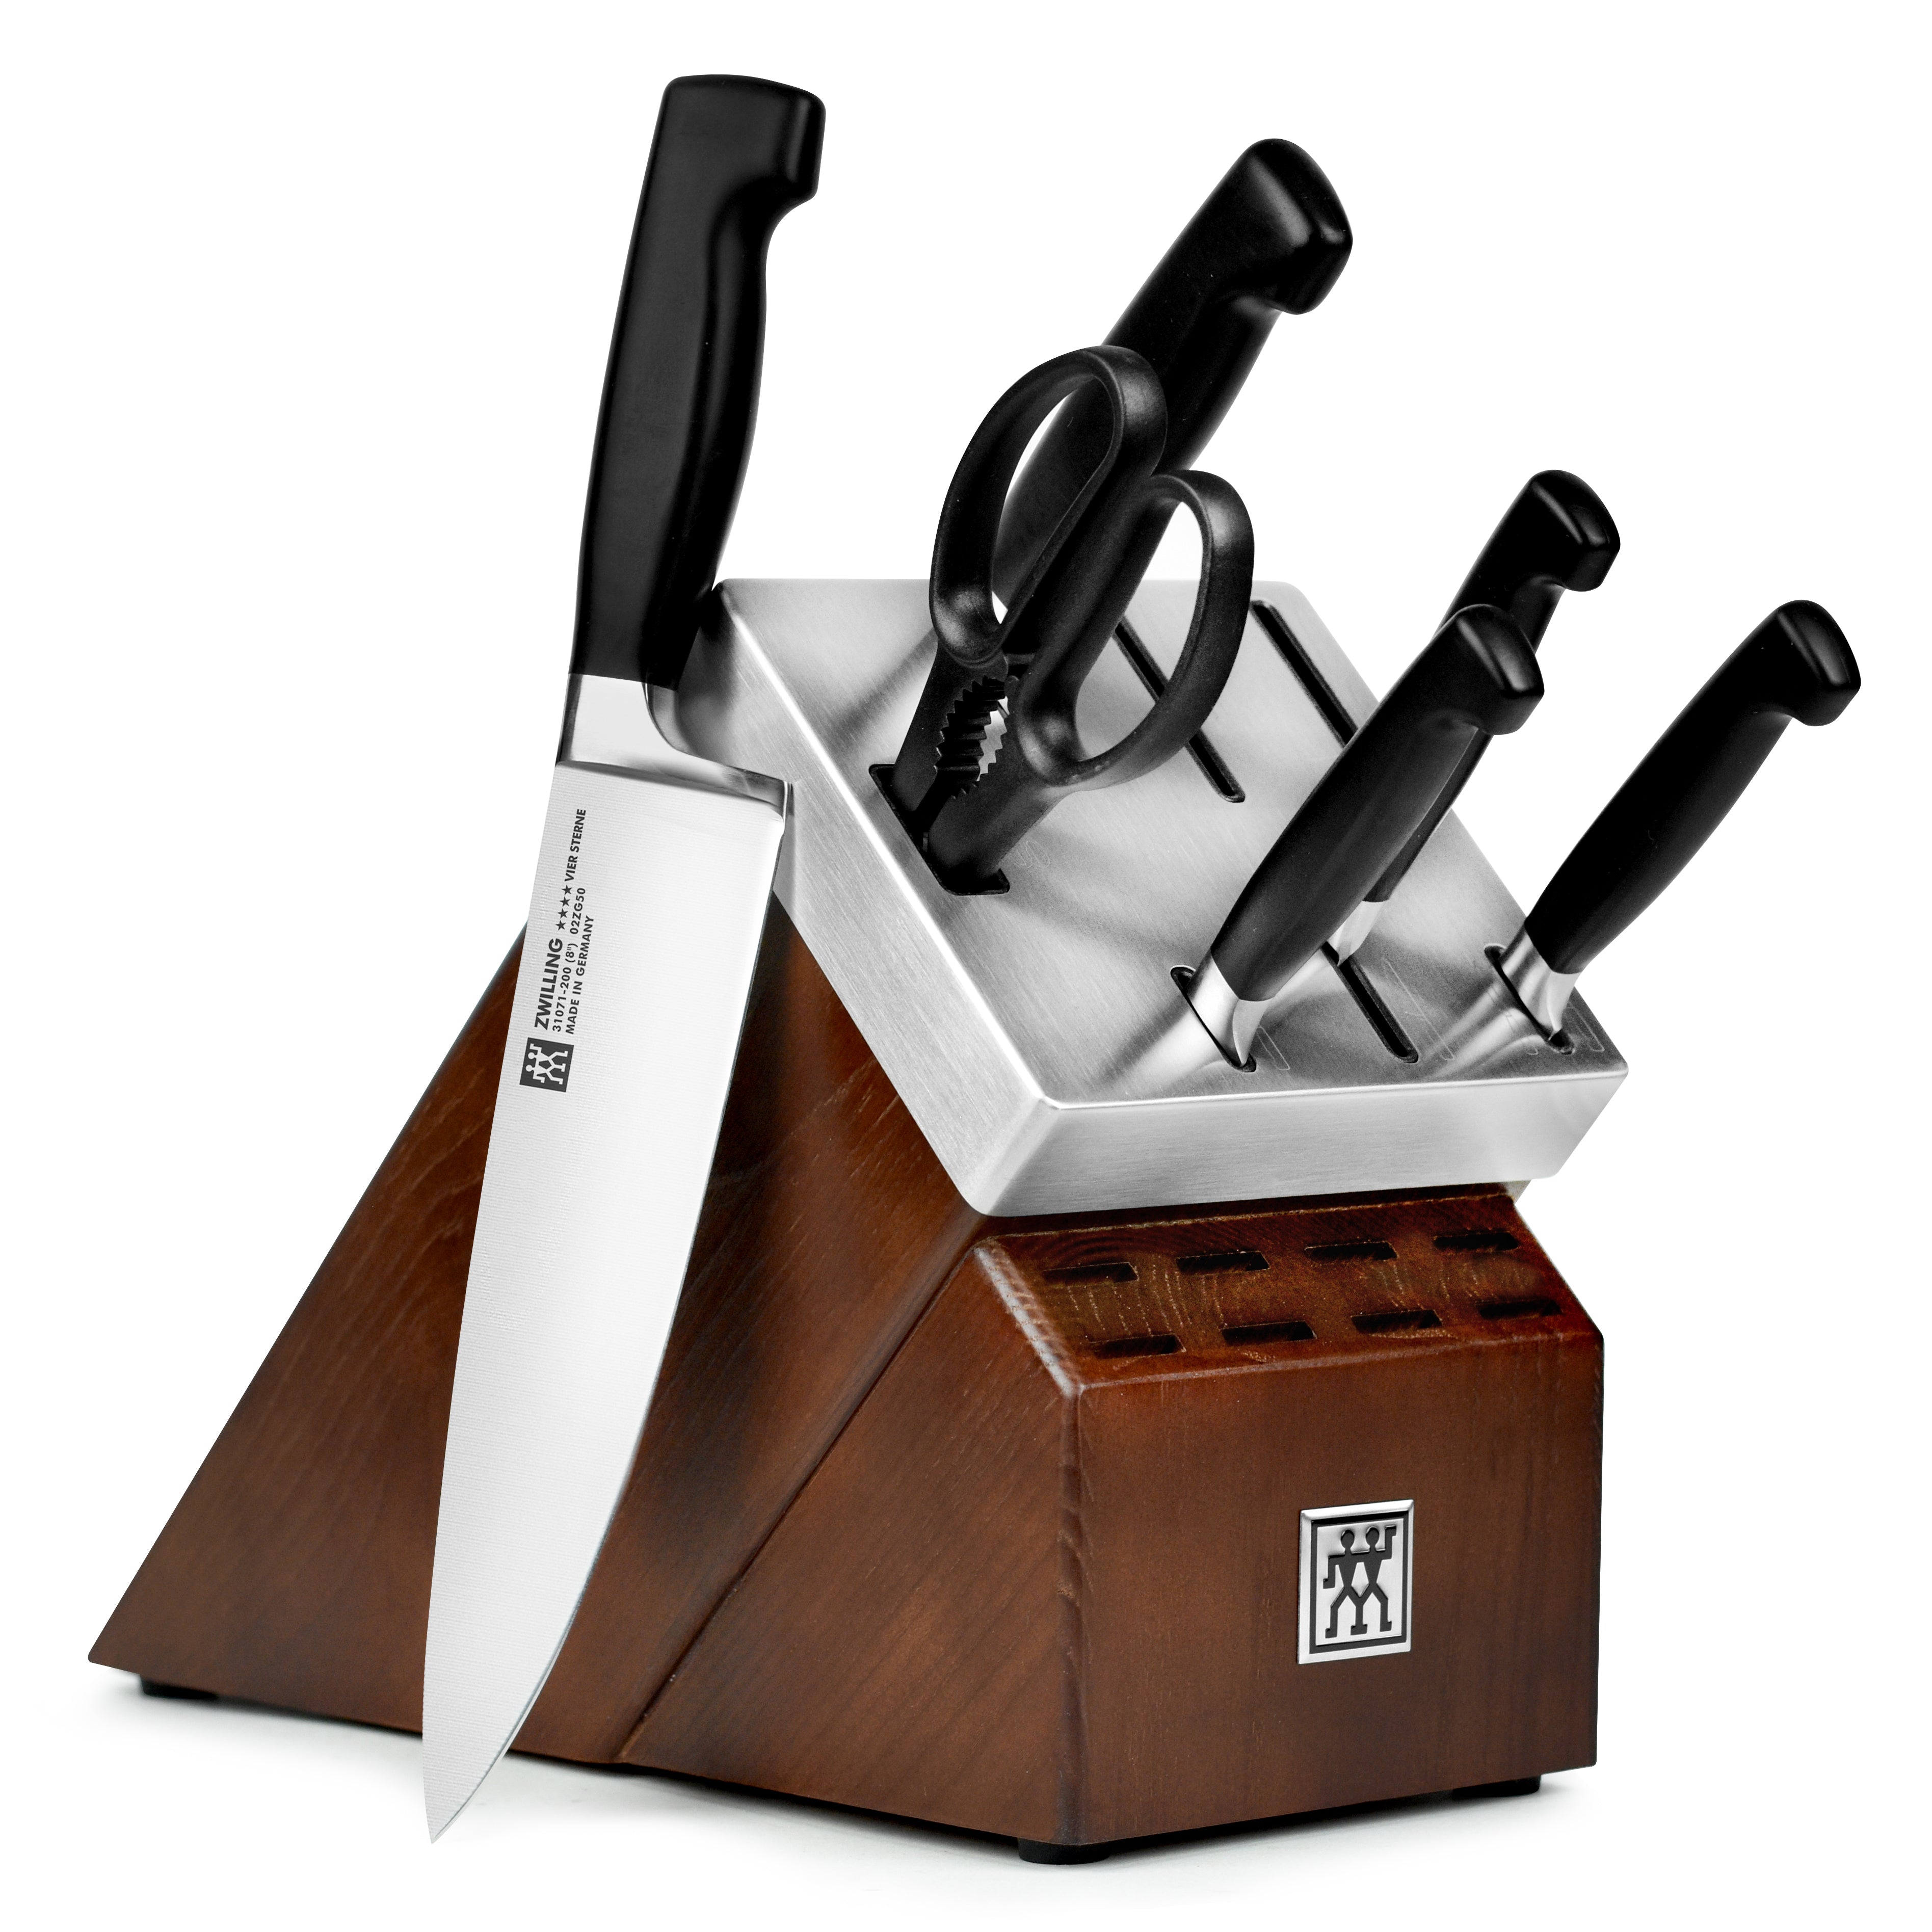 Zwilling JA Henckels 7-Piece Gourmet Self-Sharpening Knife Block Set